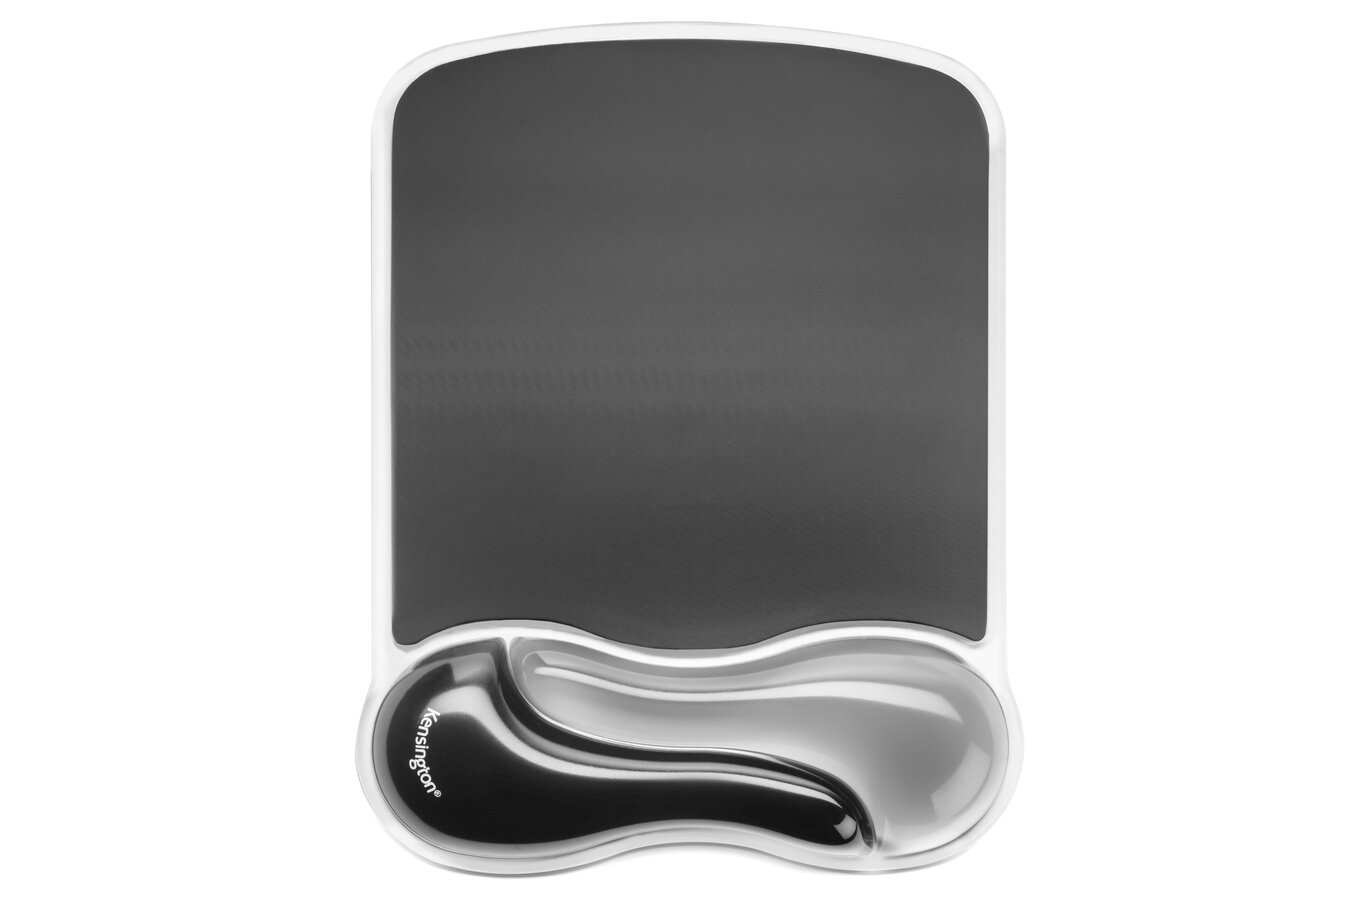 Kensington ErgoSoft Mouse Pad with Wrist Pillow - Gray